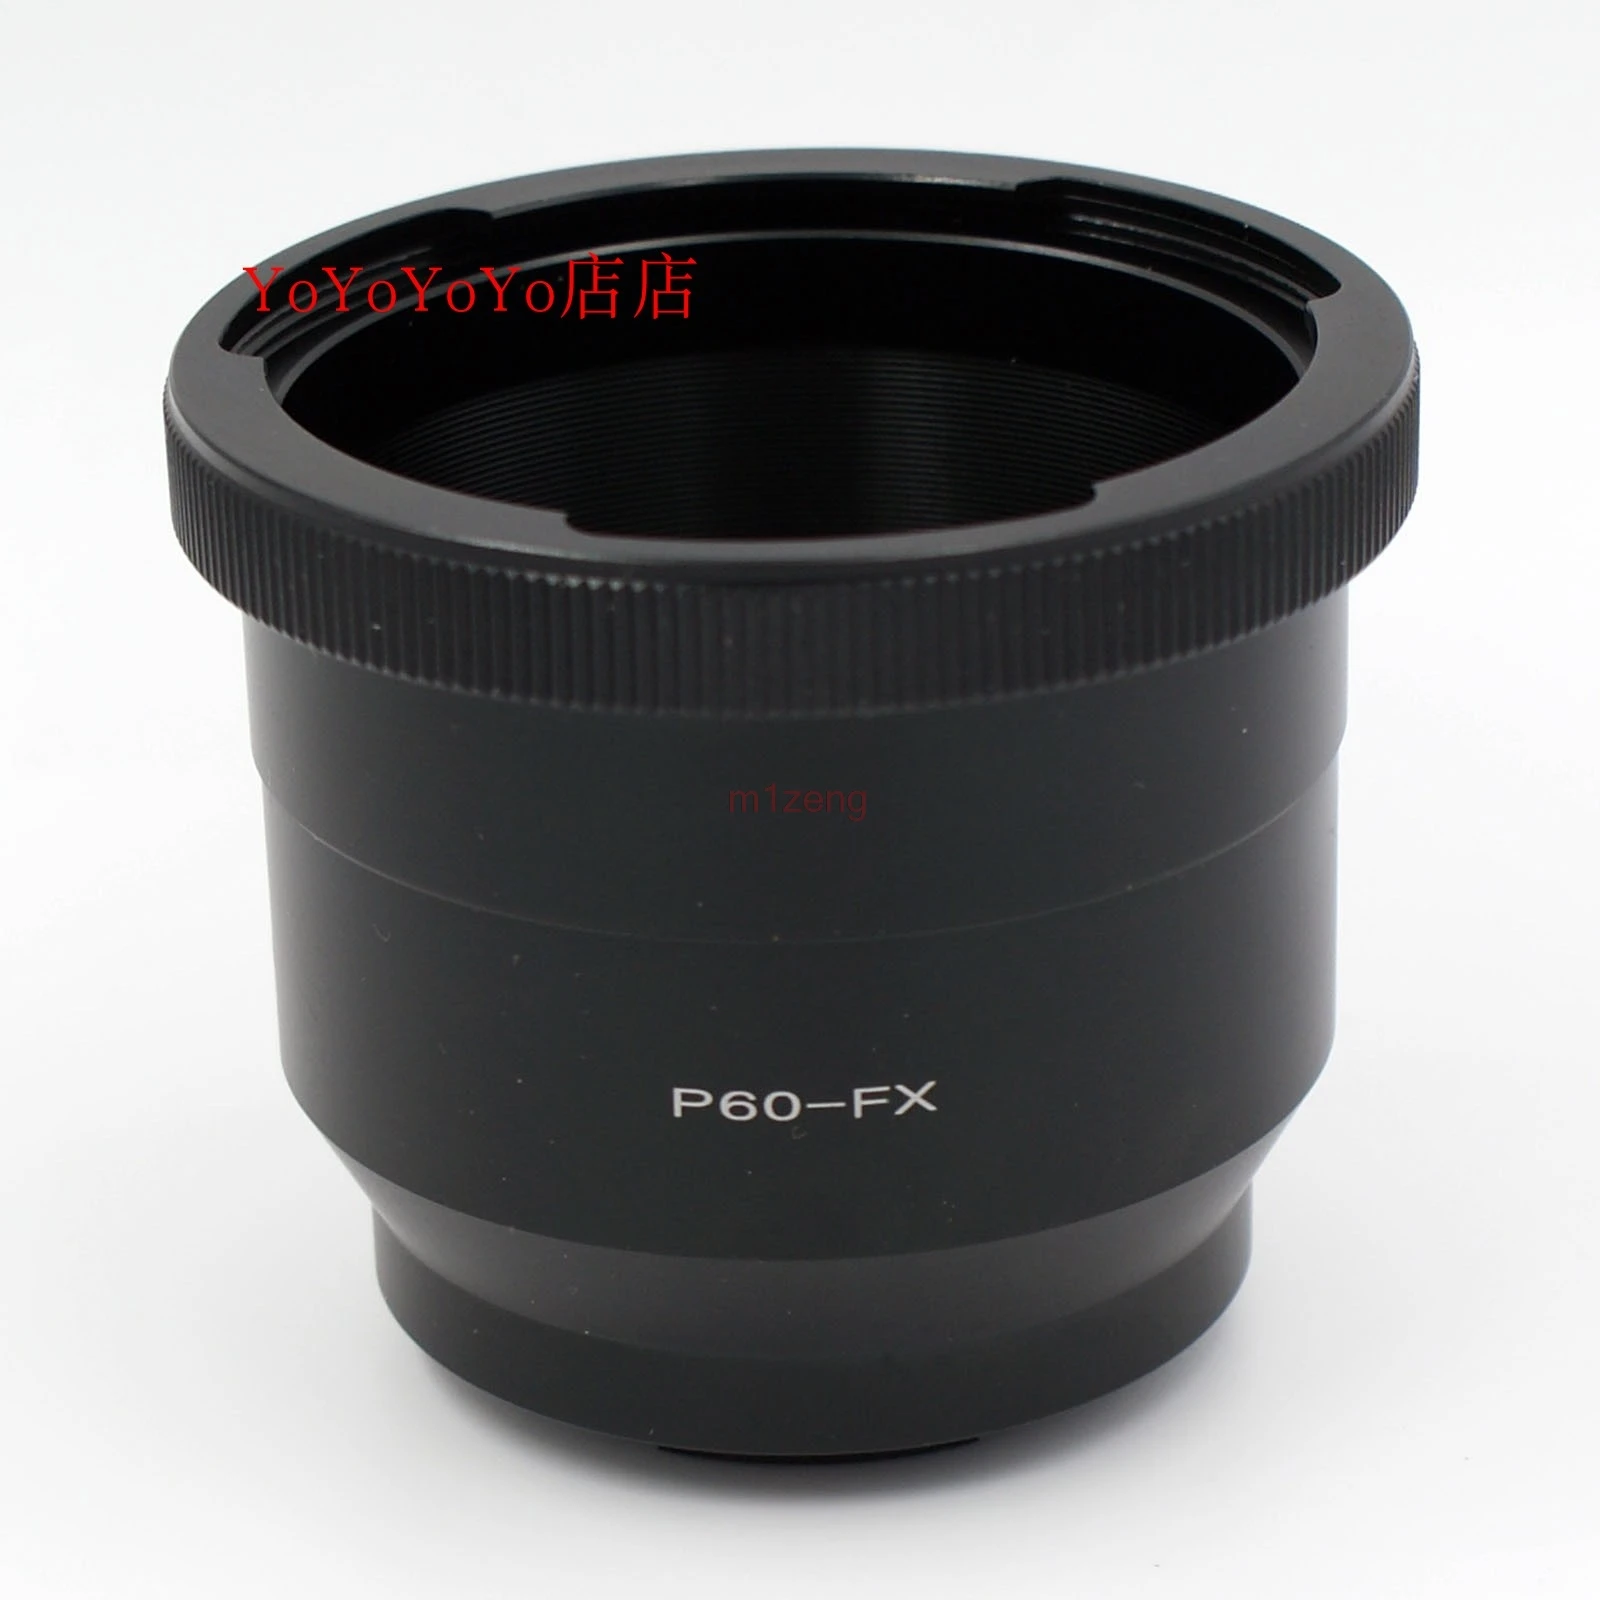 Pentacon 6/Киев 60 объектив fx переходное кольцо для fuji пленка fuji X X-E2/X-E1/X-Pro1/X-M1/XA2/XA1/X-T1 xt2 xt10 xt20 xa3 xpro2 камера